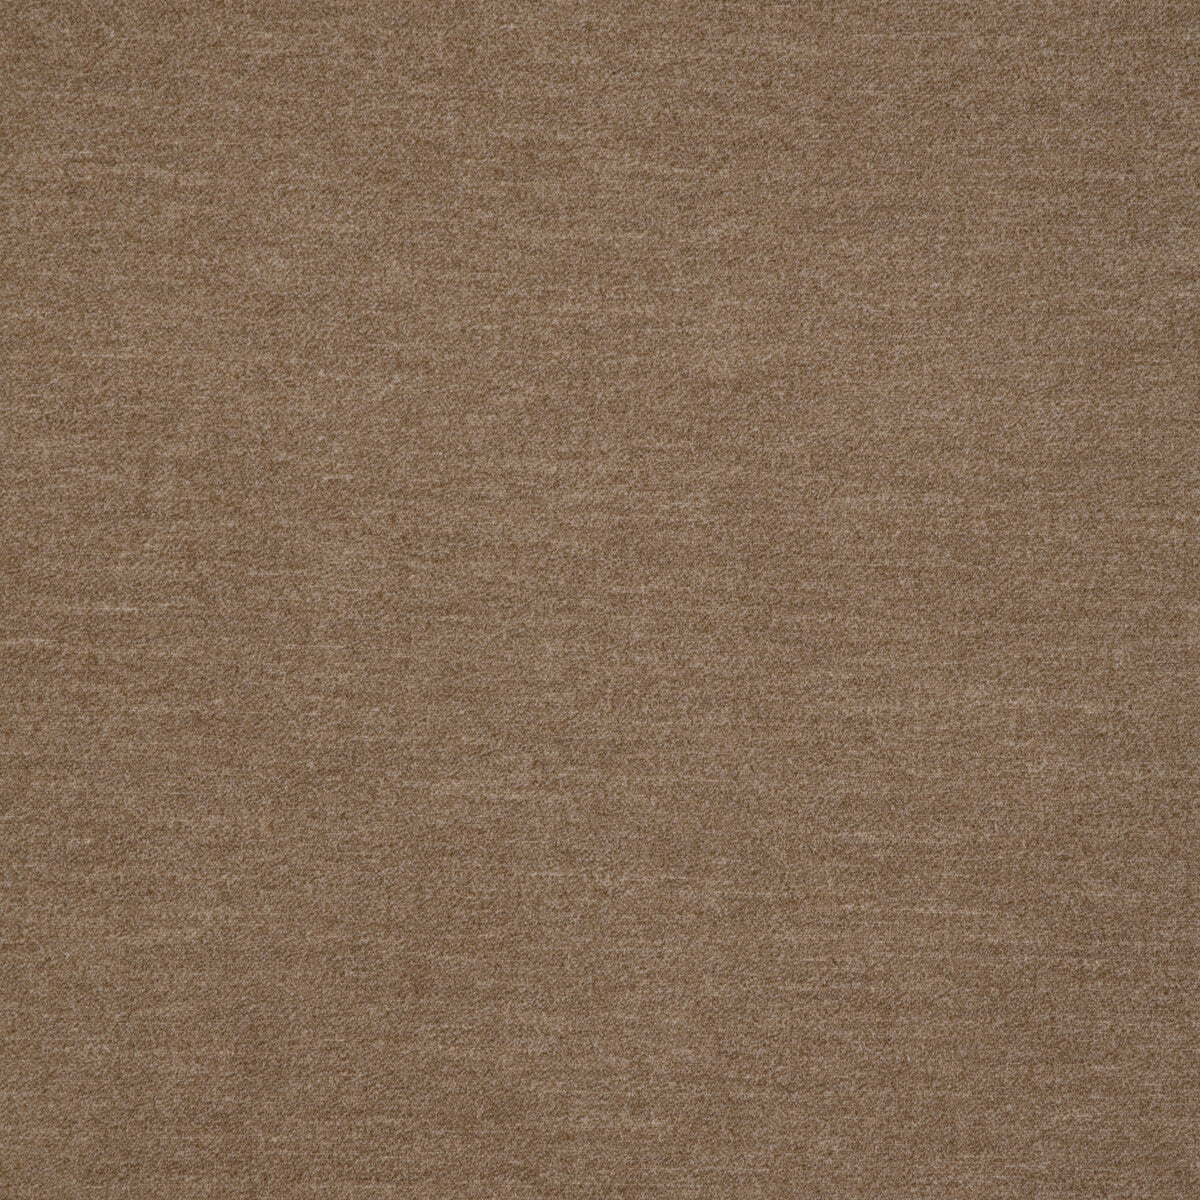 Kravet Smart fabric in 37000-1616 color - pattern 37000.1616.0 - by Kravet Smart in the Performance Kravetarmor collection